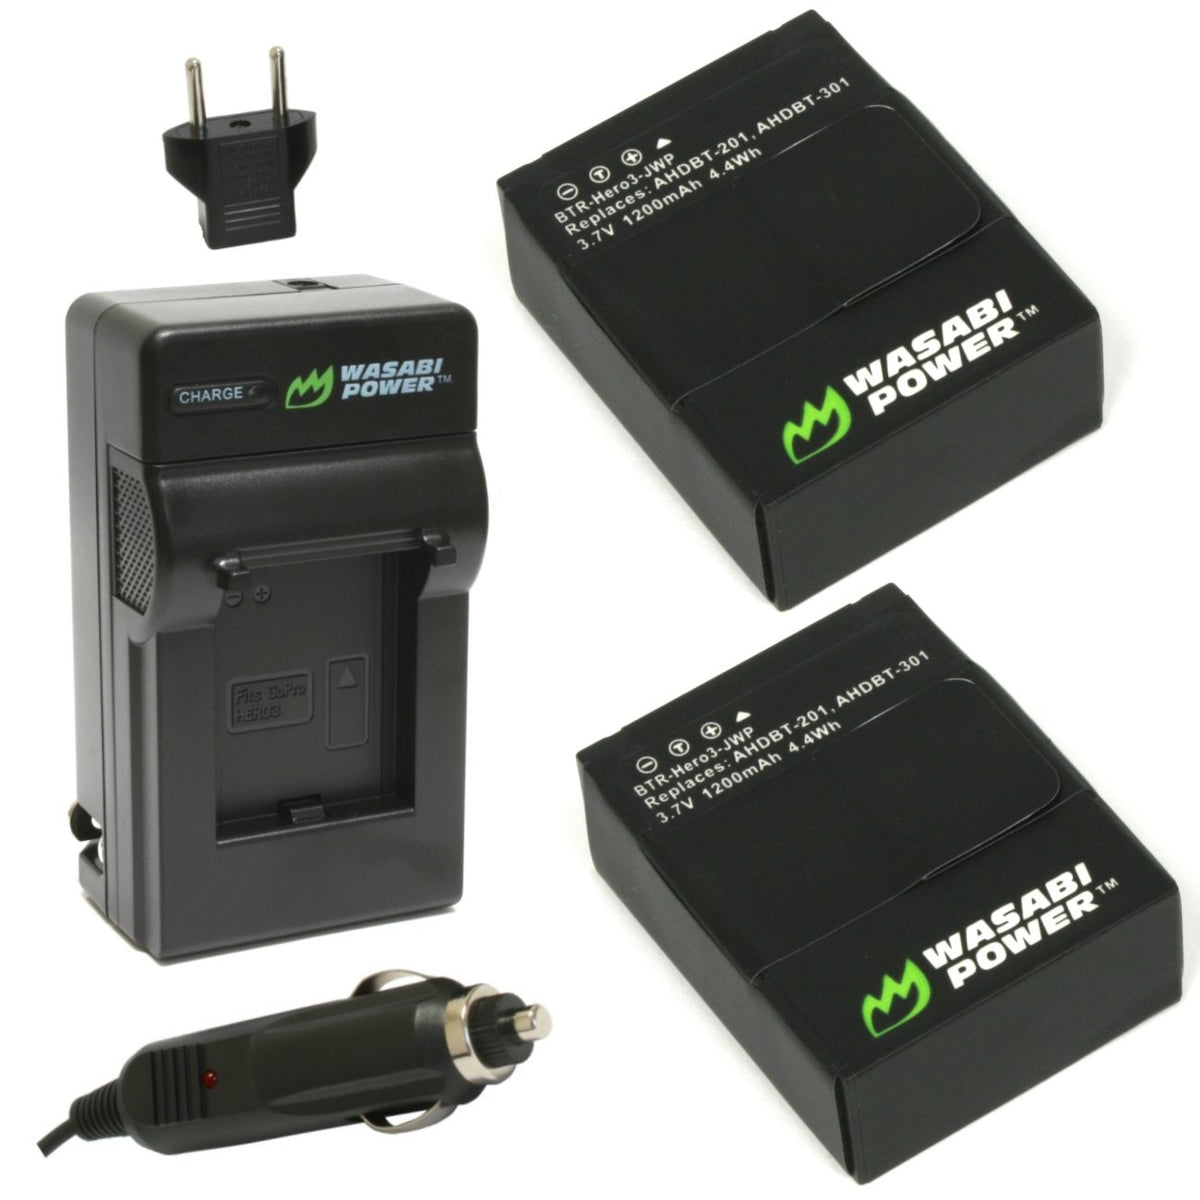 Batterie Gopro pour camescope HERO3 et HERO3+